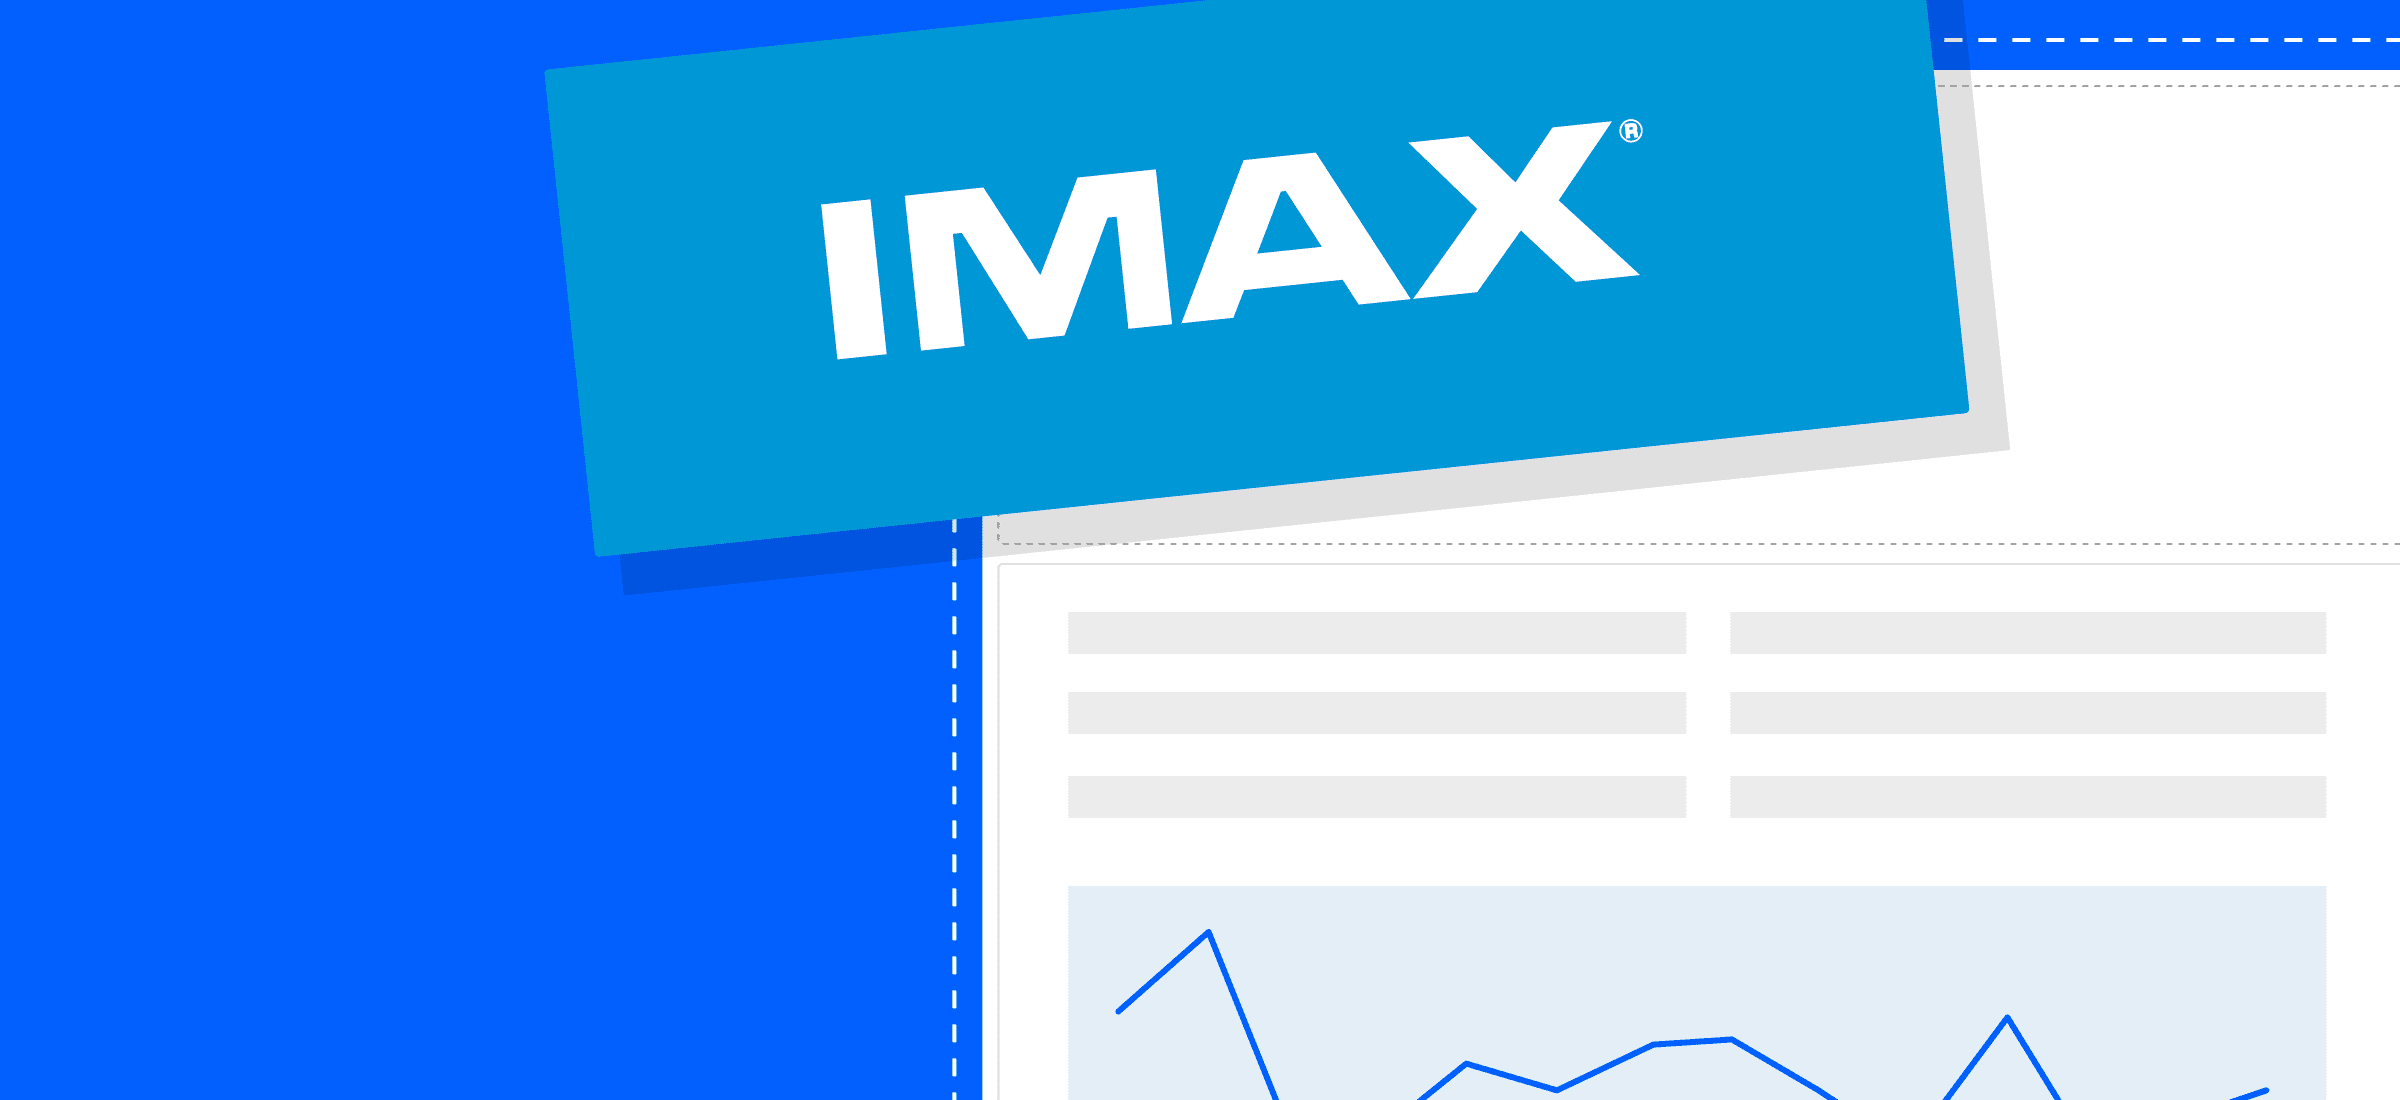 IMAX tag blog cover.